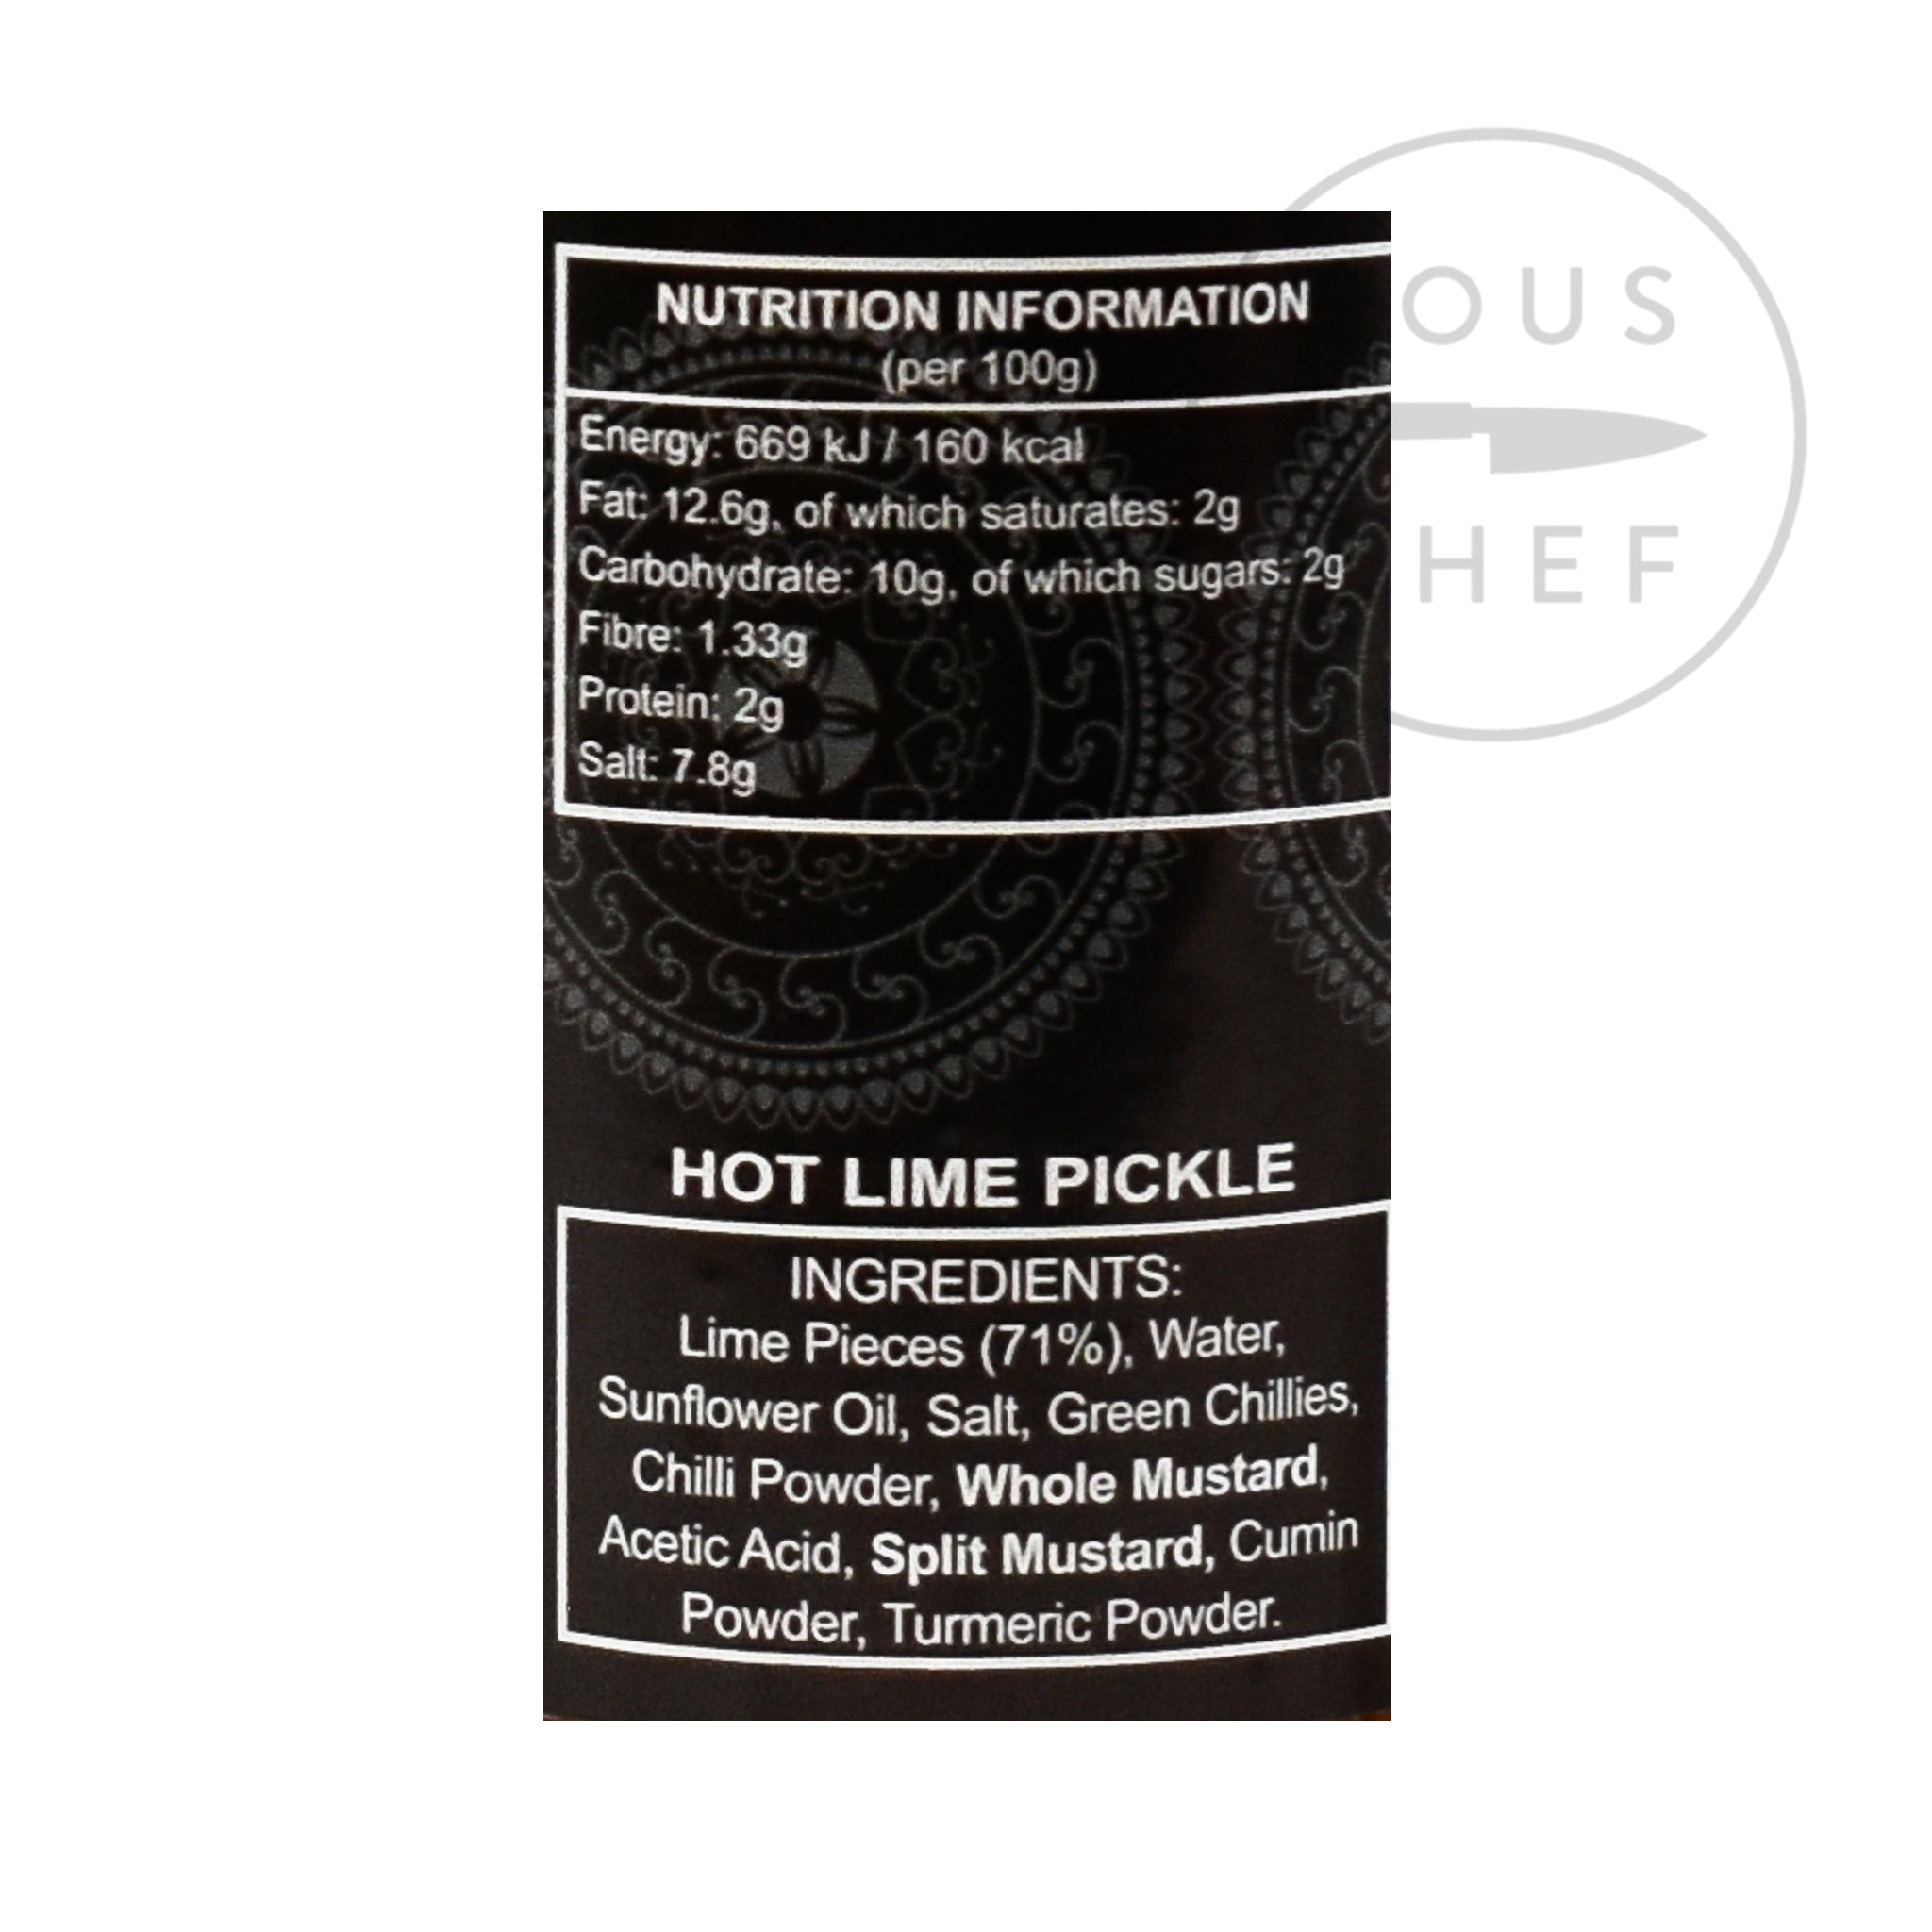 Ferns' Hot Lime Pickle 380g nutritional information ingredients